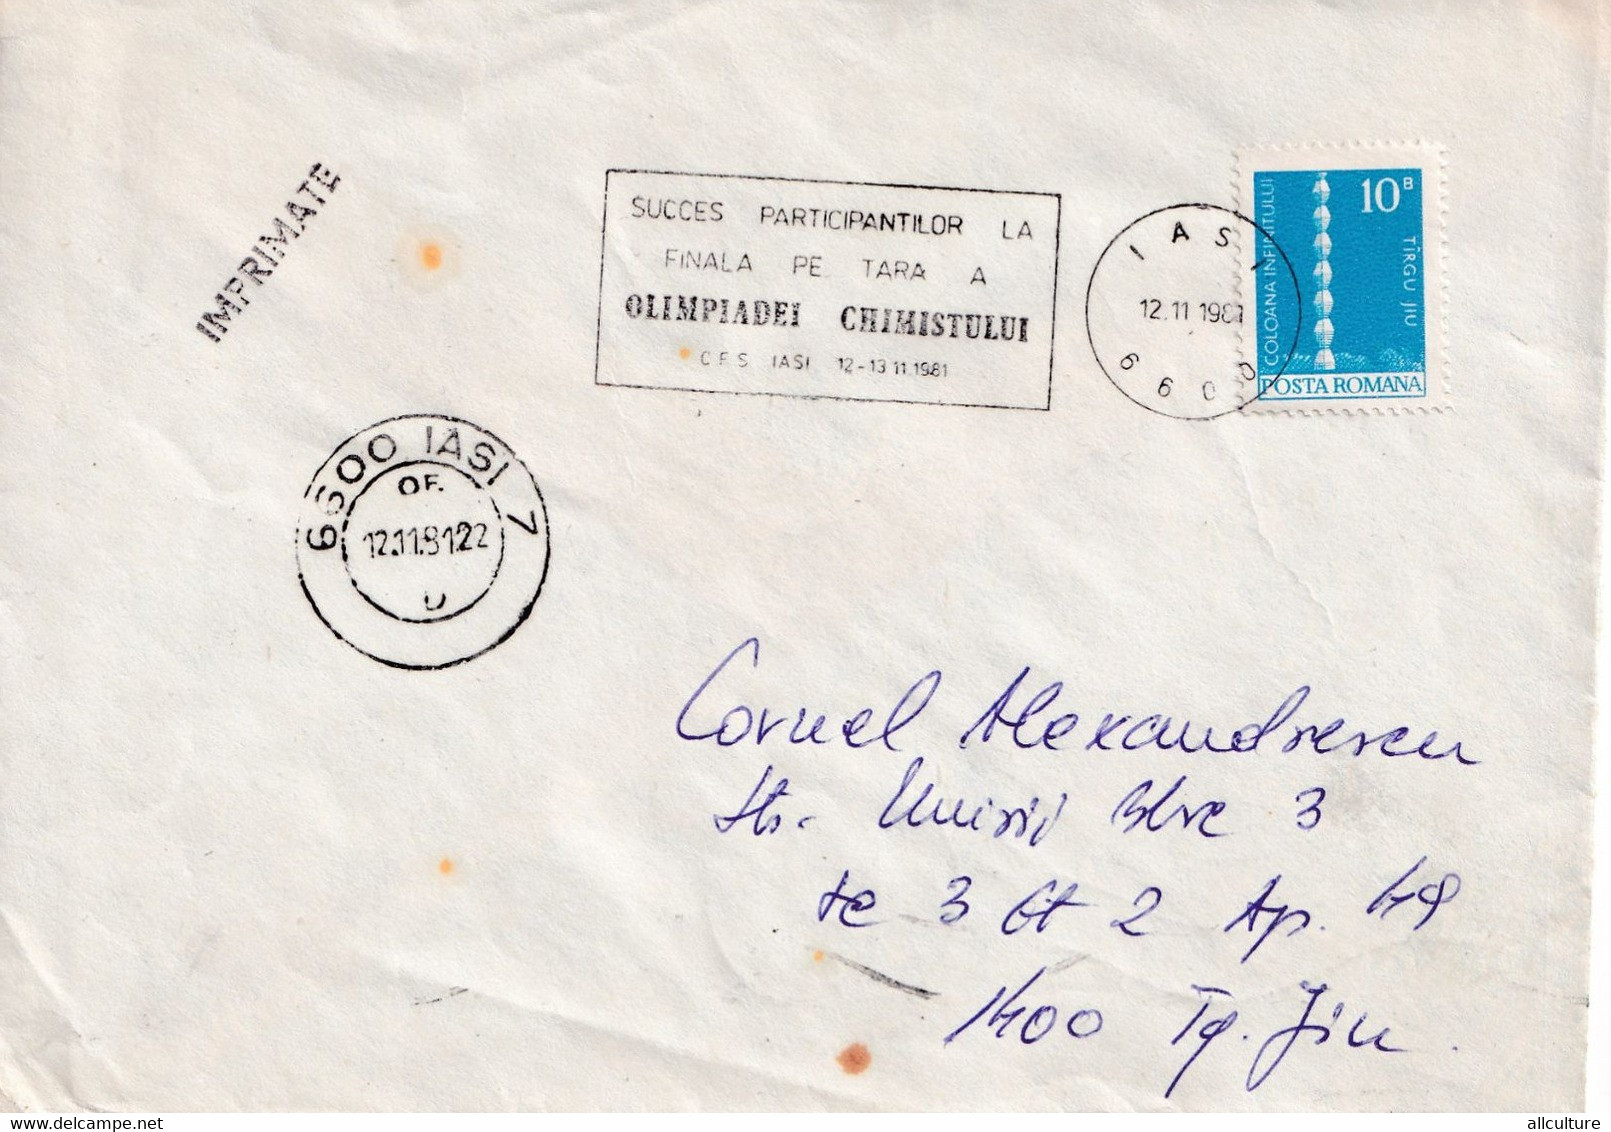 A3084 - Olimpiada Chimistului, Iasi 1981 Romania Posta Romana - Covers & Documents